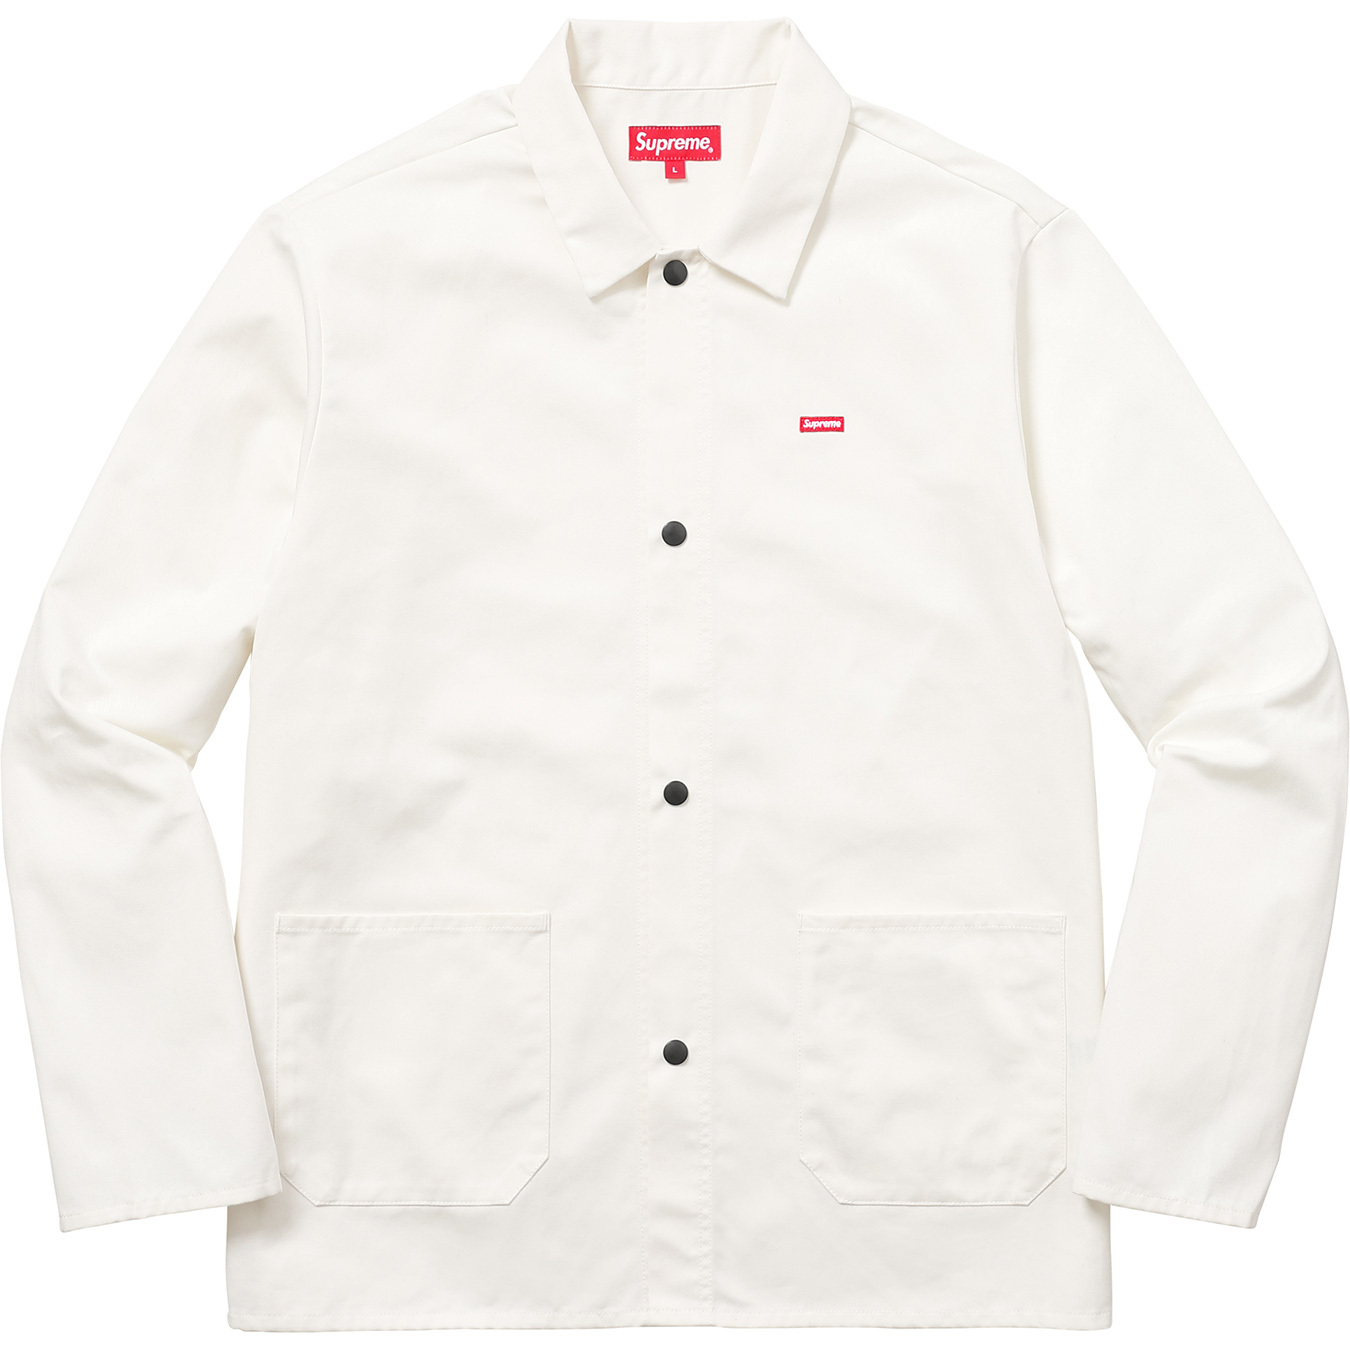 Supreme Shop Jacket White